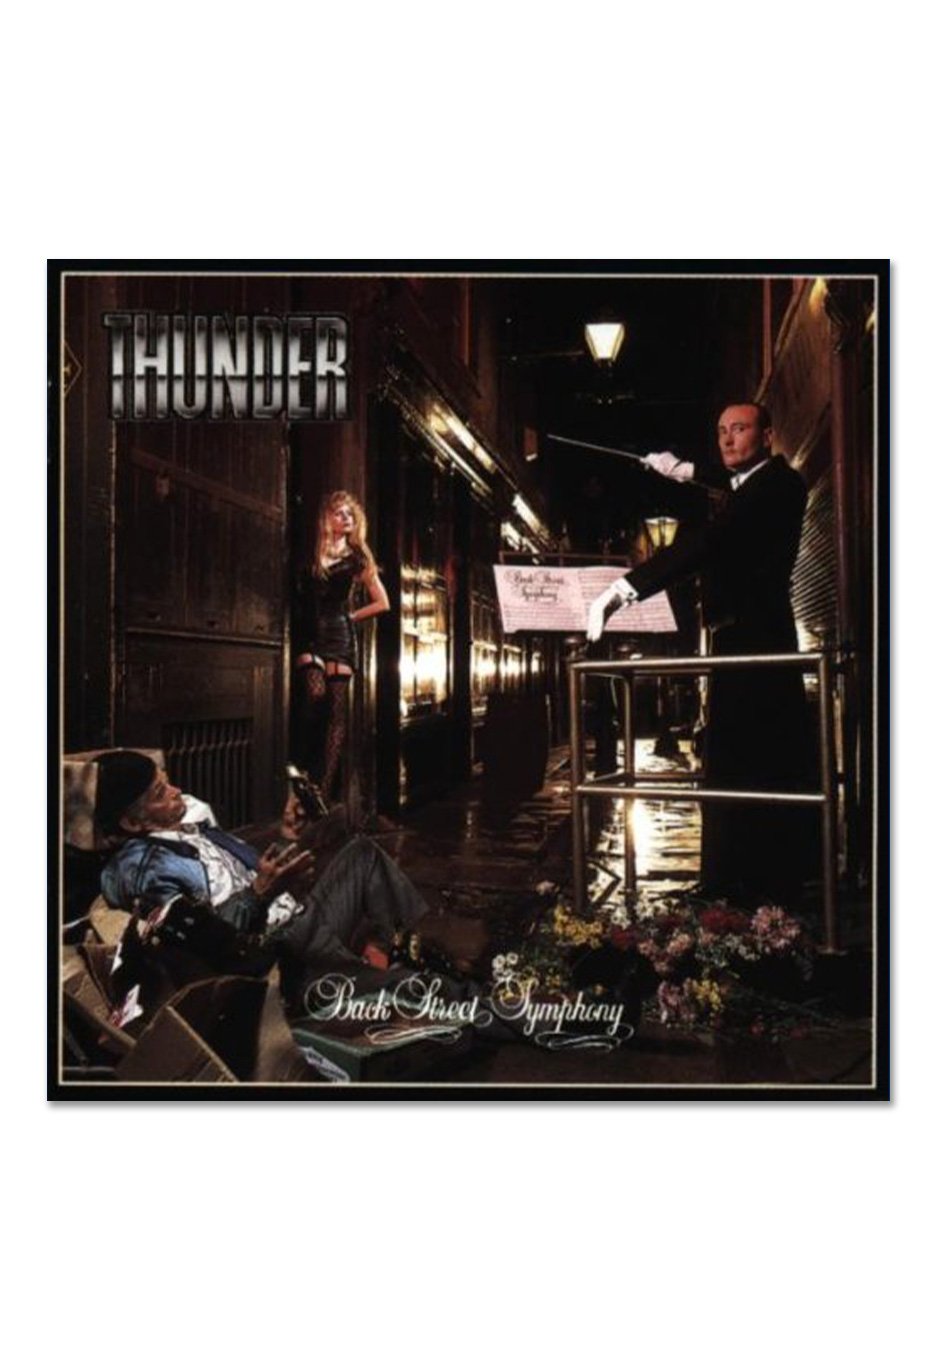 Thunder - Backstreet Symphony (Expanded Version) Ltd. Gold + Silver - Colored 2 Vinyl